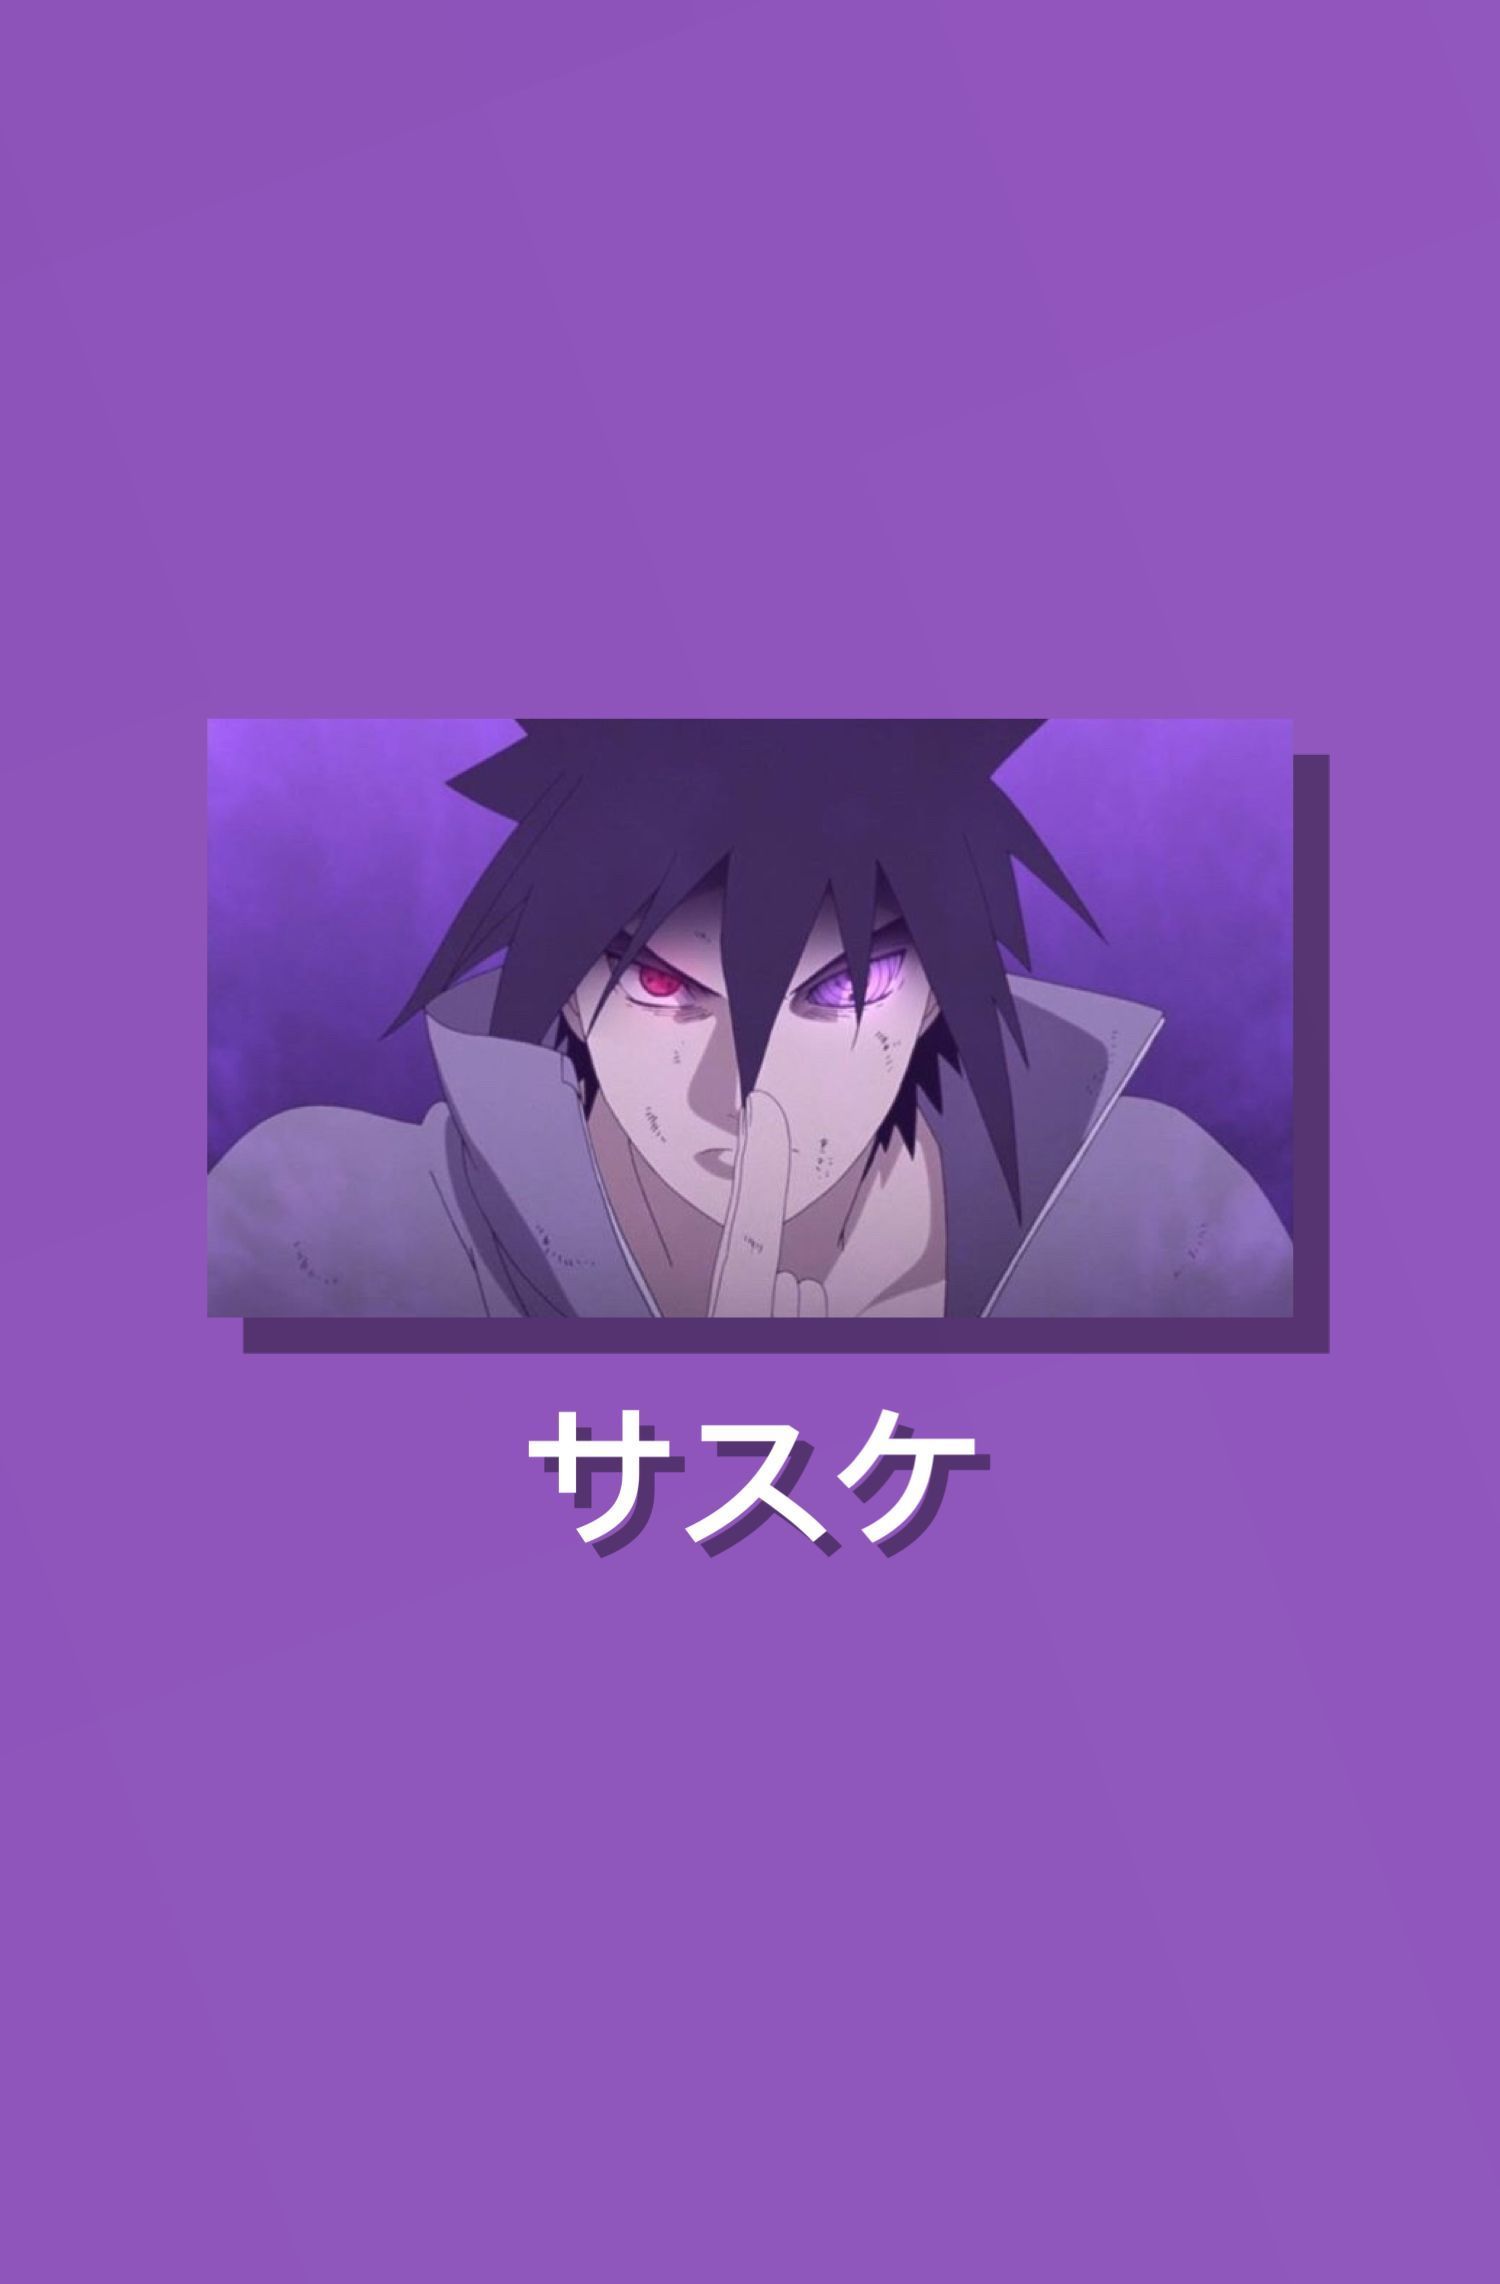 Purple aesthetic wallpaper of Sasuke from the anime series Naruto - Sasuke Uchiha